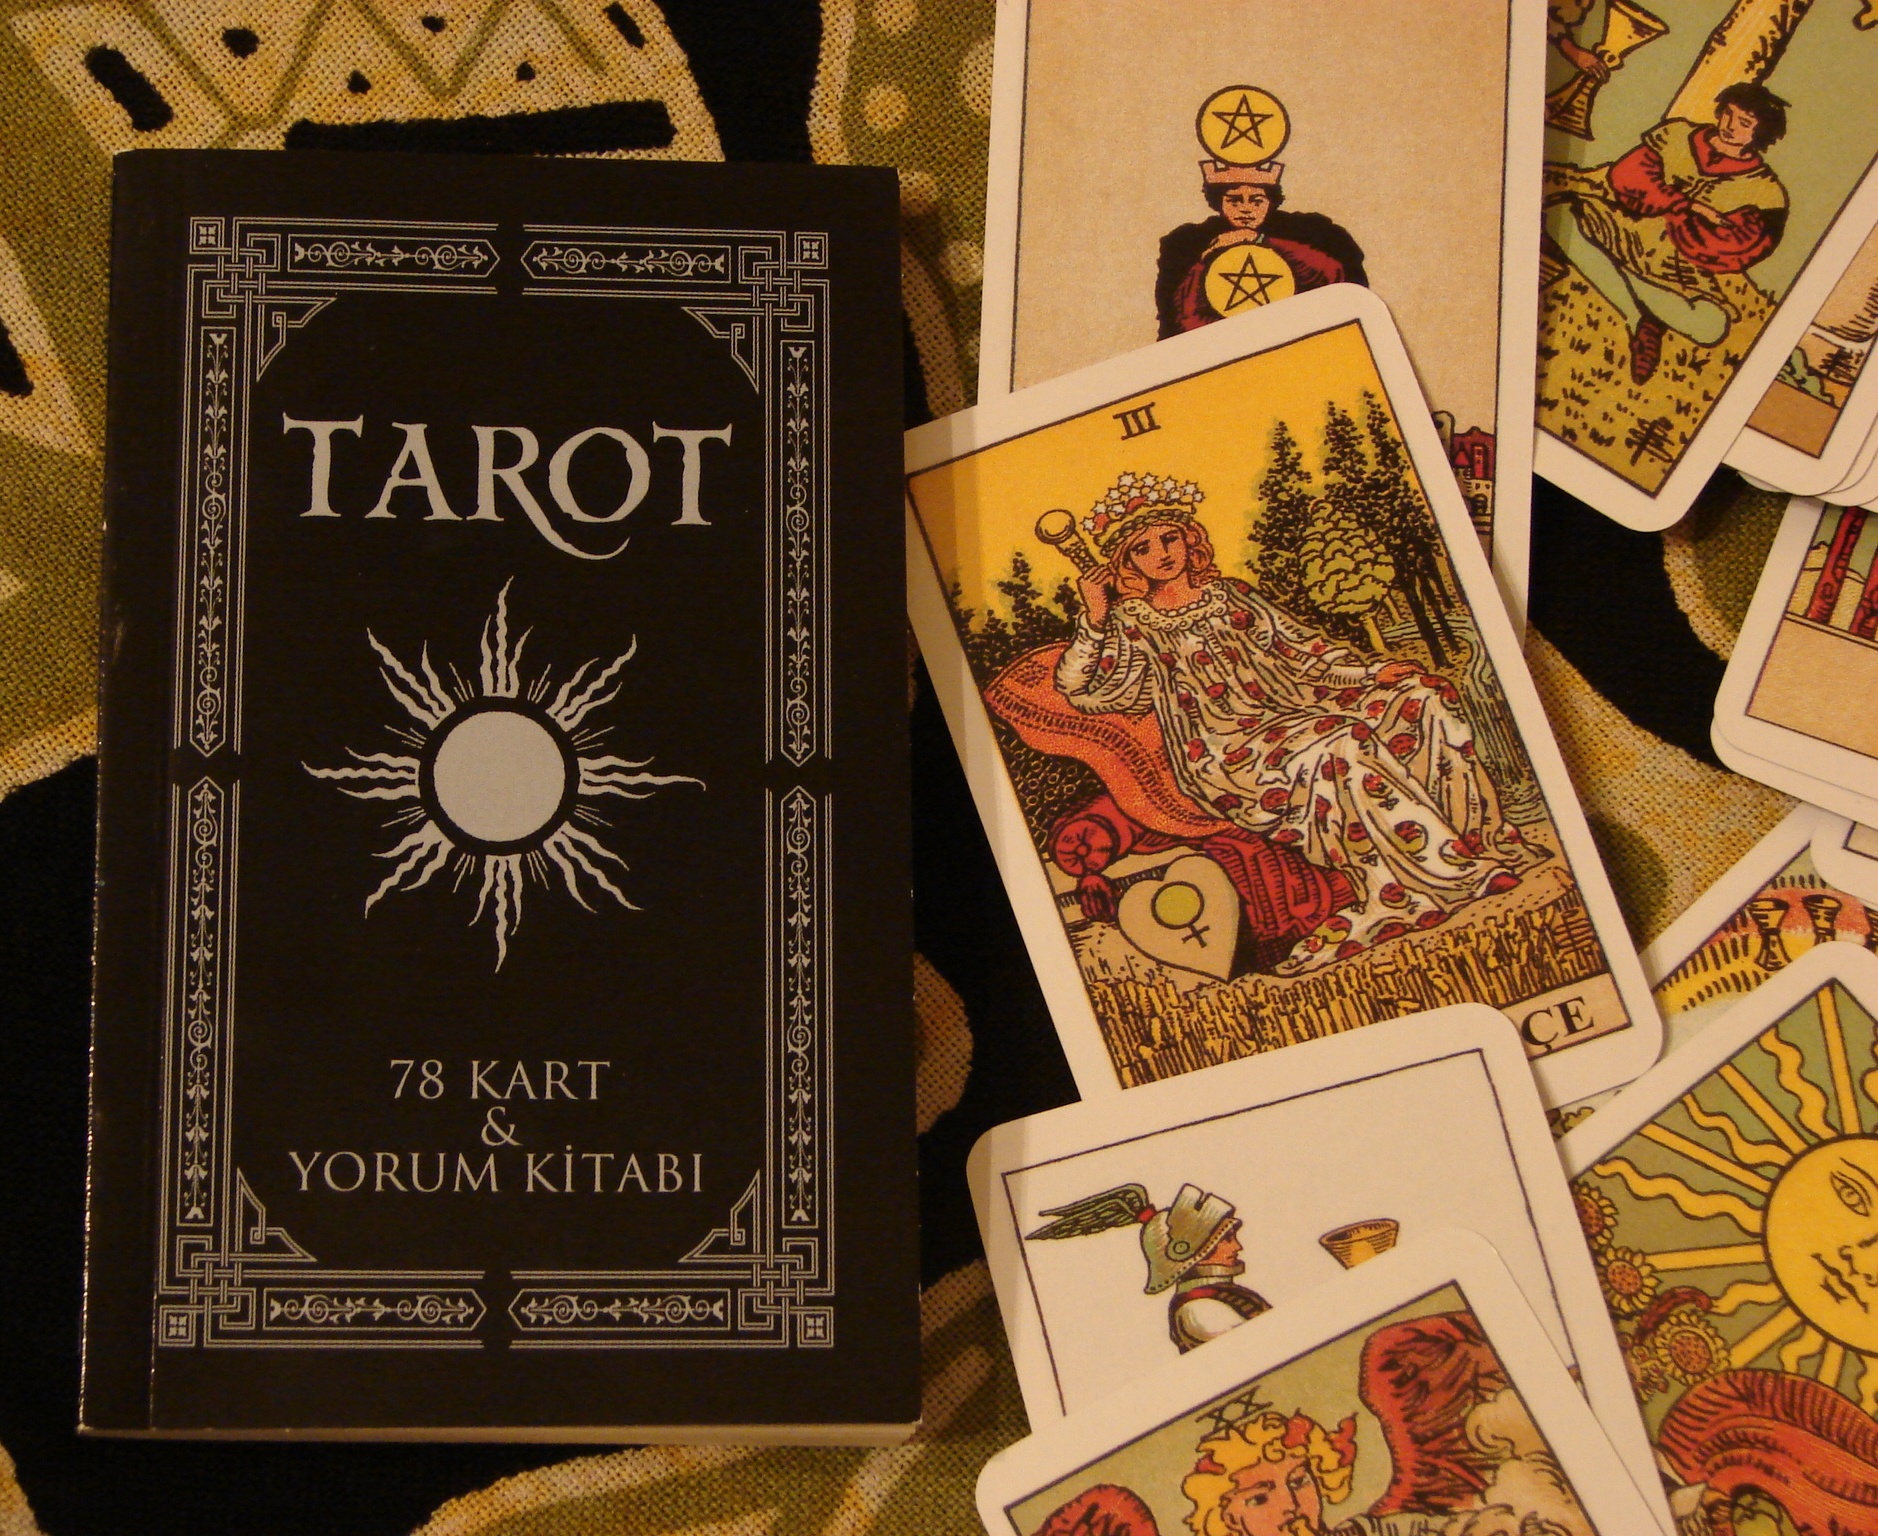 Карта таро москва. Карты "Таро". Упаковка карт Таро. Карты Таро упаковка. Карты Таро на русском.